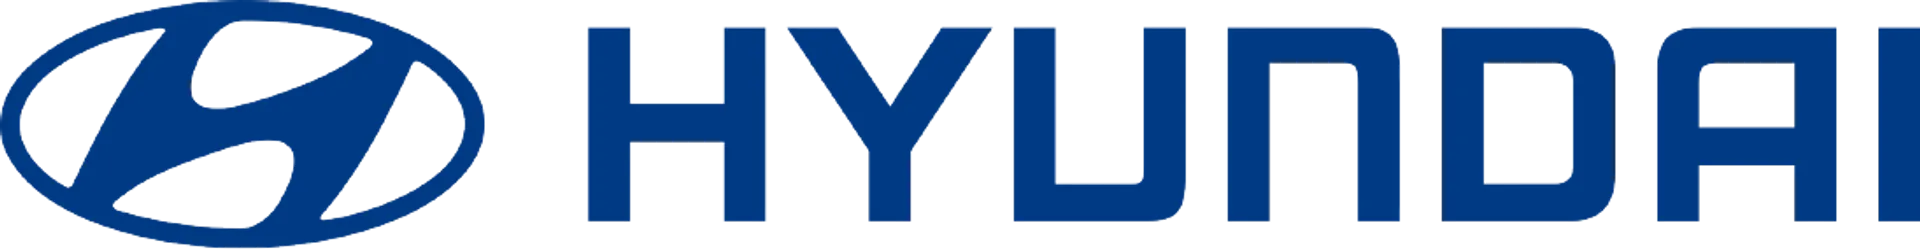 HYUNDAI logo of current flyer